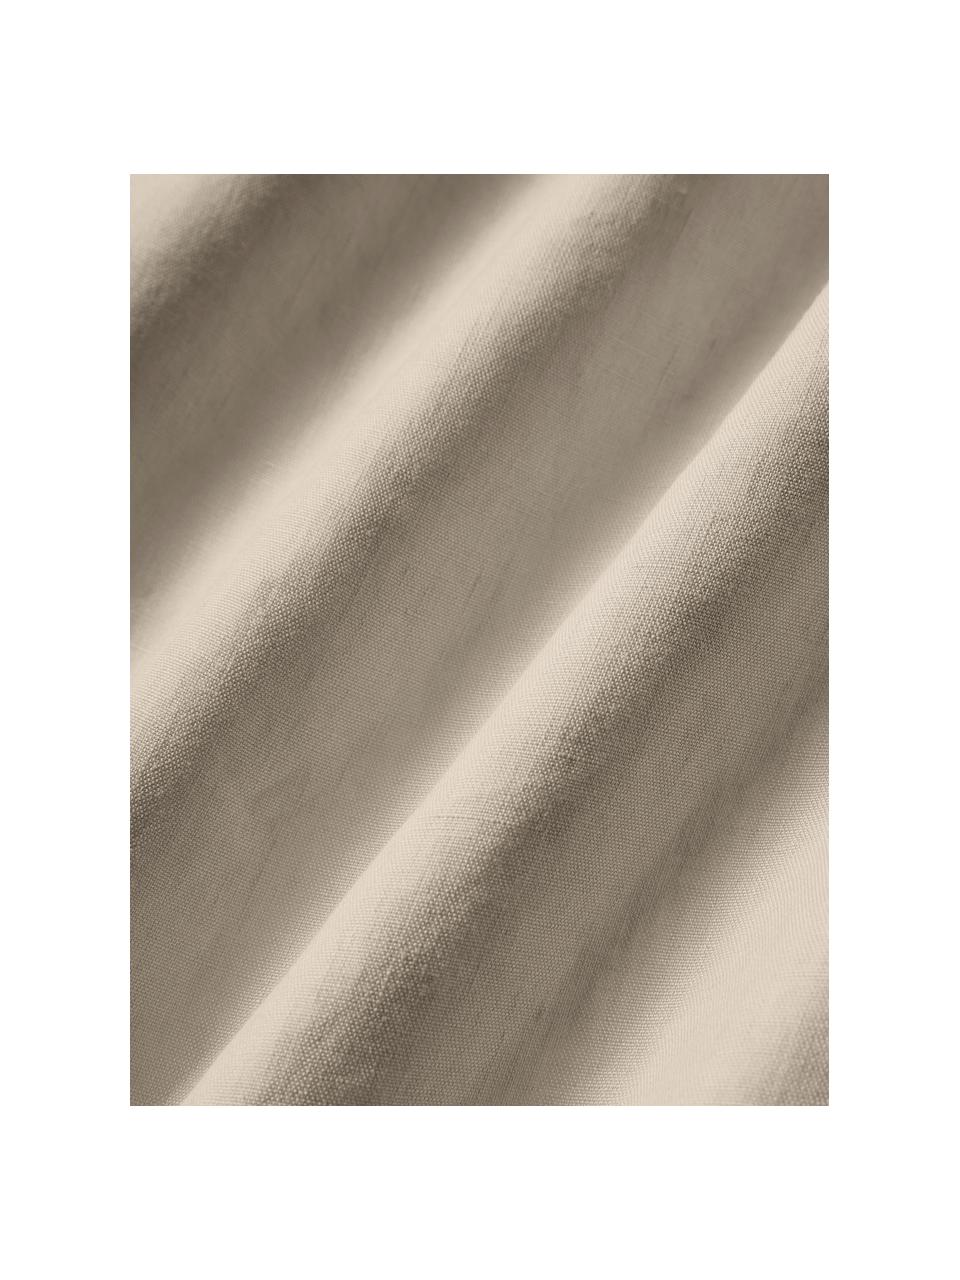 Taie d'oreiller en lin délavé Airy, Taupe, larg. 50 x long. 70 cm